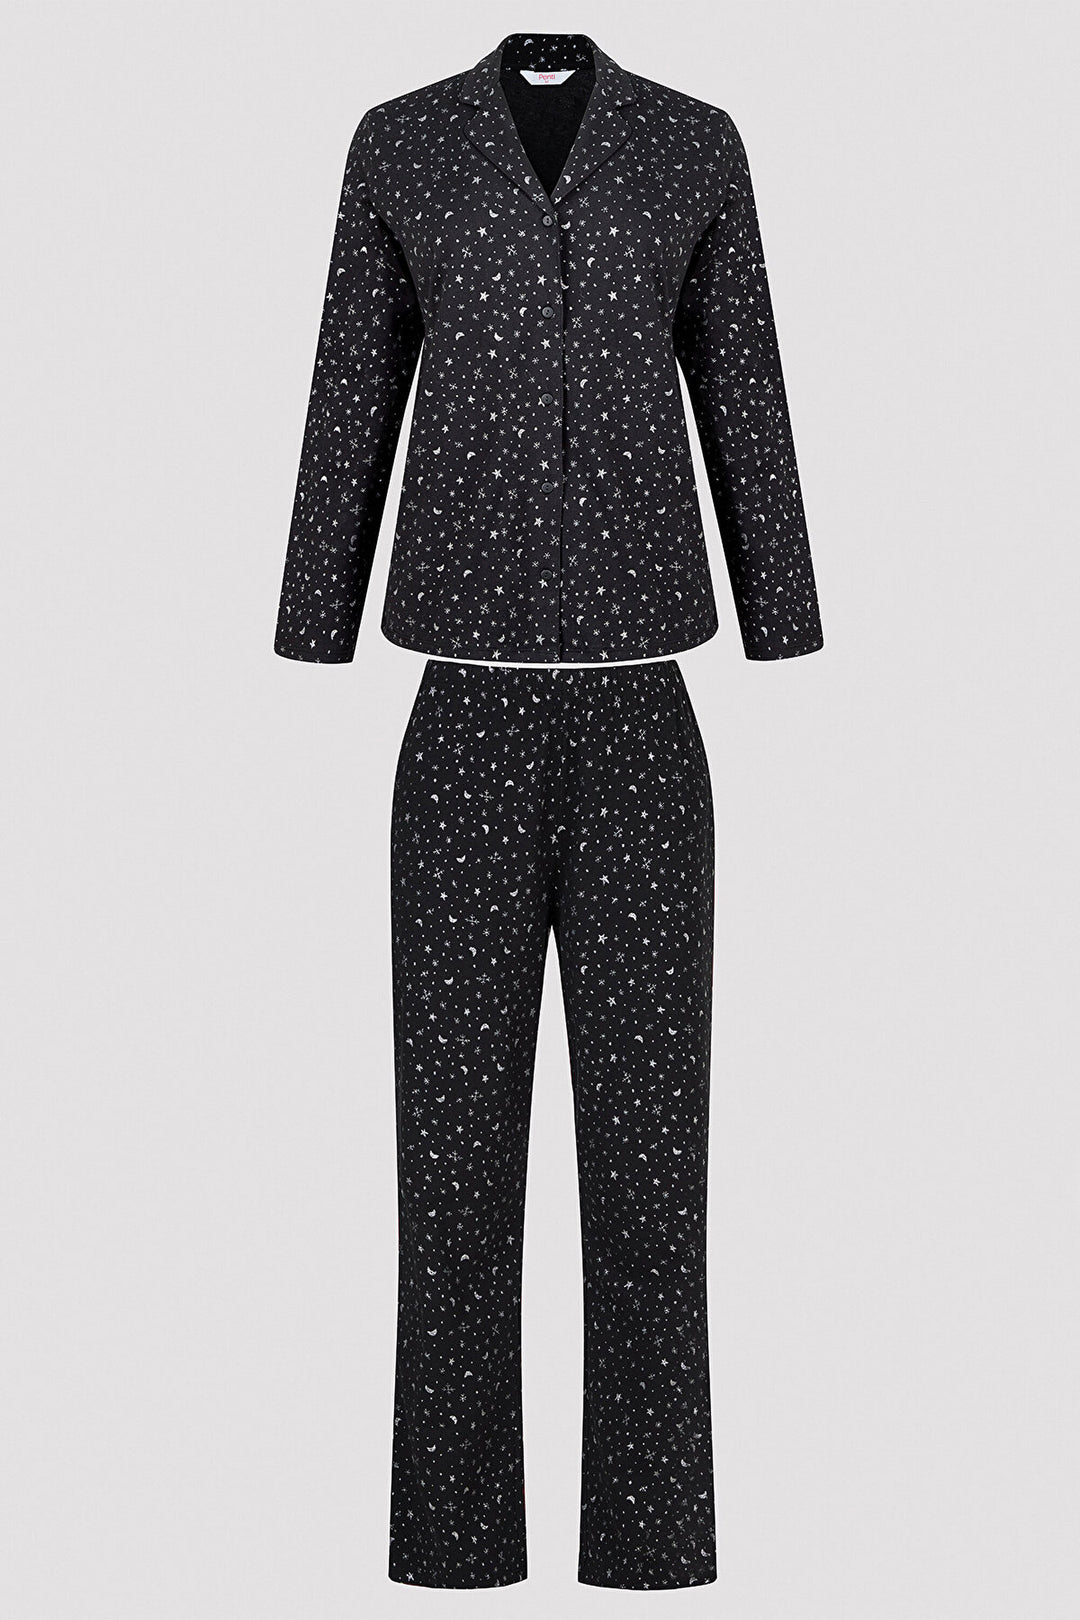 Dark Sky Long Sleeve Shirt Black Pajama Set